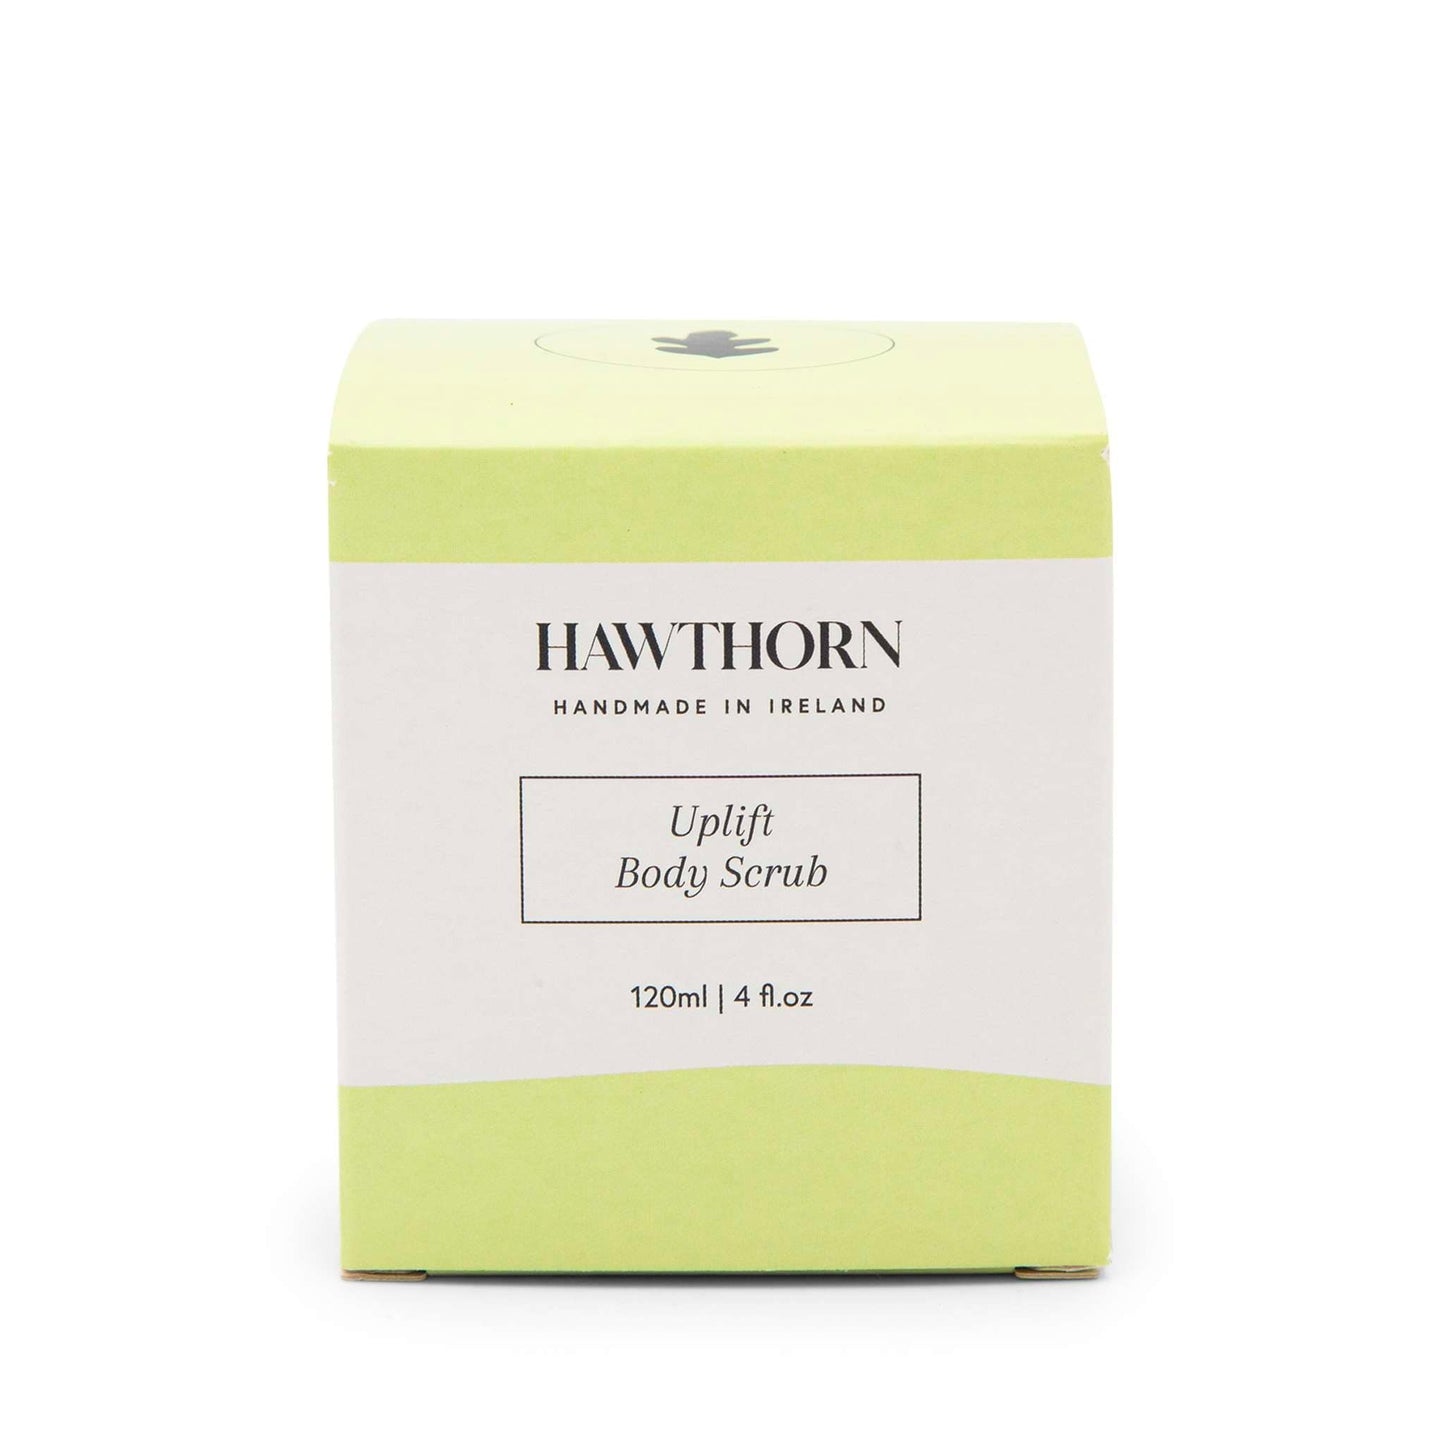 Hawthorn Handmade Skincare Skin Care Uplift Body Scrub 120ml - Hawthorn Skincare